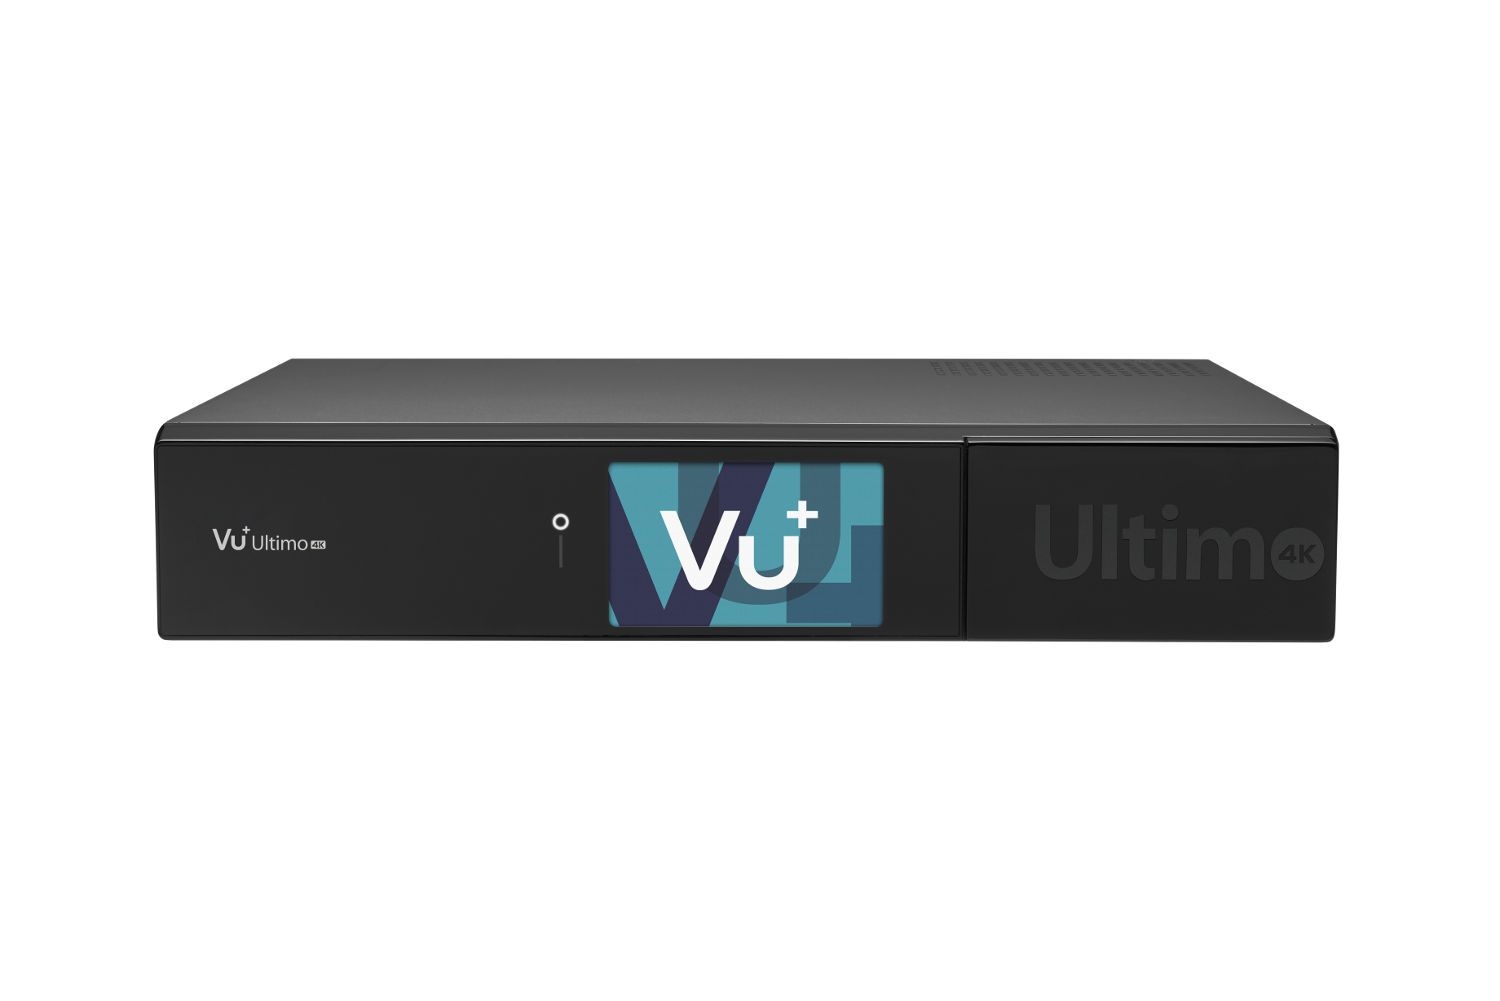 VU+ Ultimo 4K 1x DVB-S2X FBC Twin / 1x DVB-T2 Dual Tuner 500 GB HDD Linux Receiver UHD 2160p